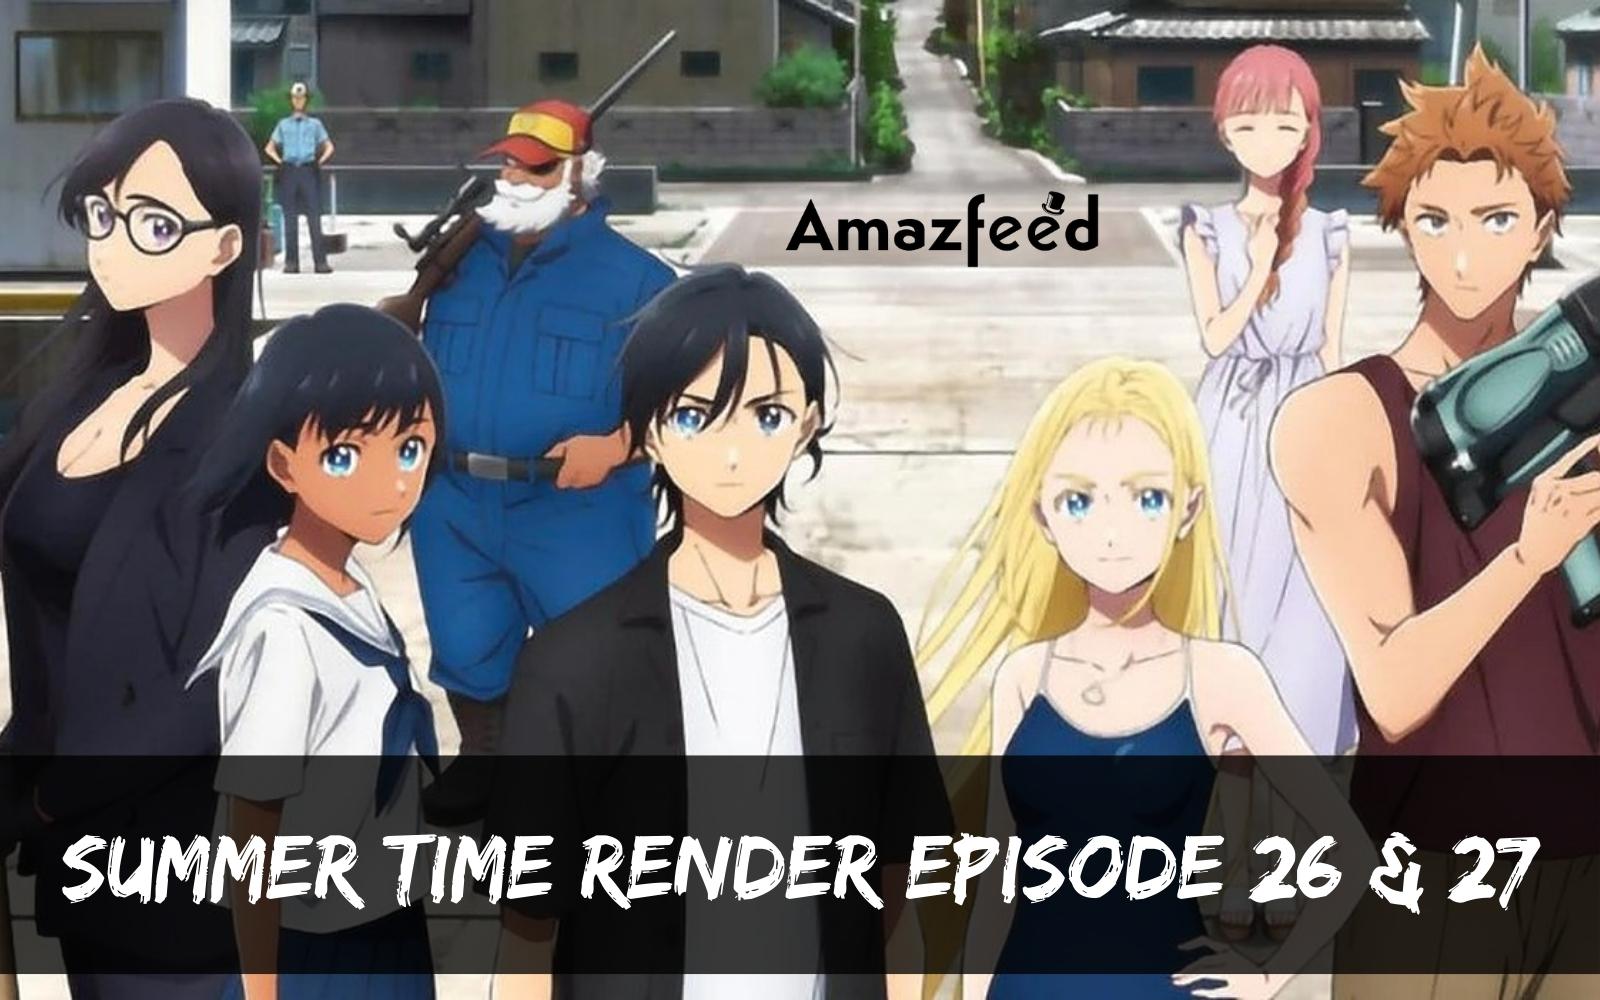 Summer Time Rendering – Anime de drama e suspense ganha 1º trailer